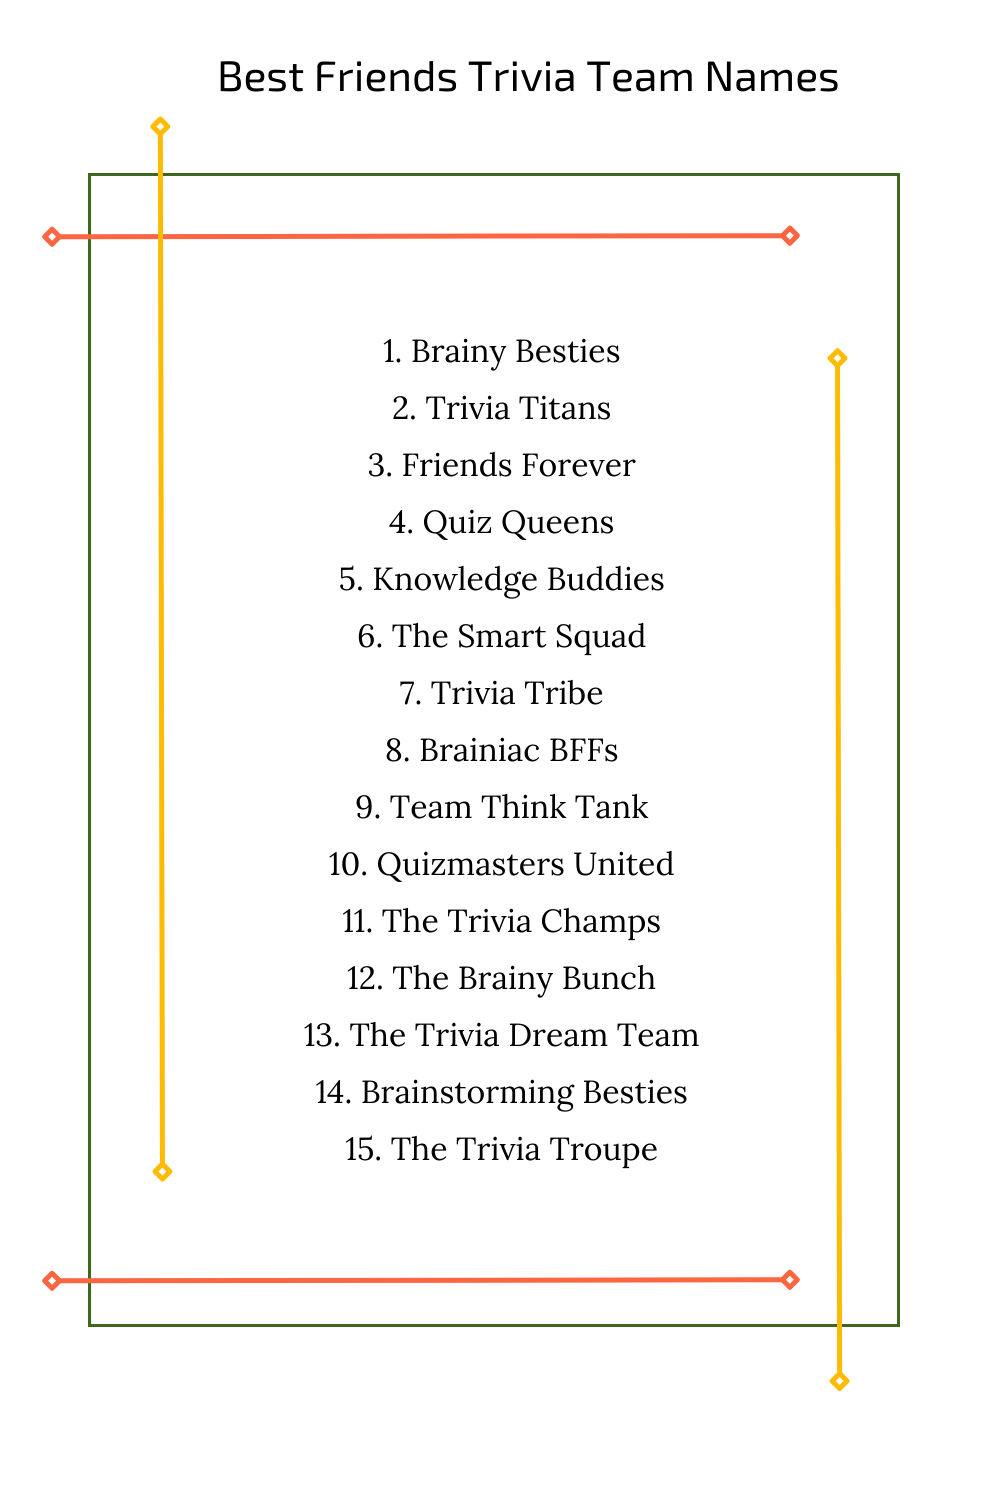 Best Friends Trivia Team Names